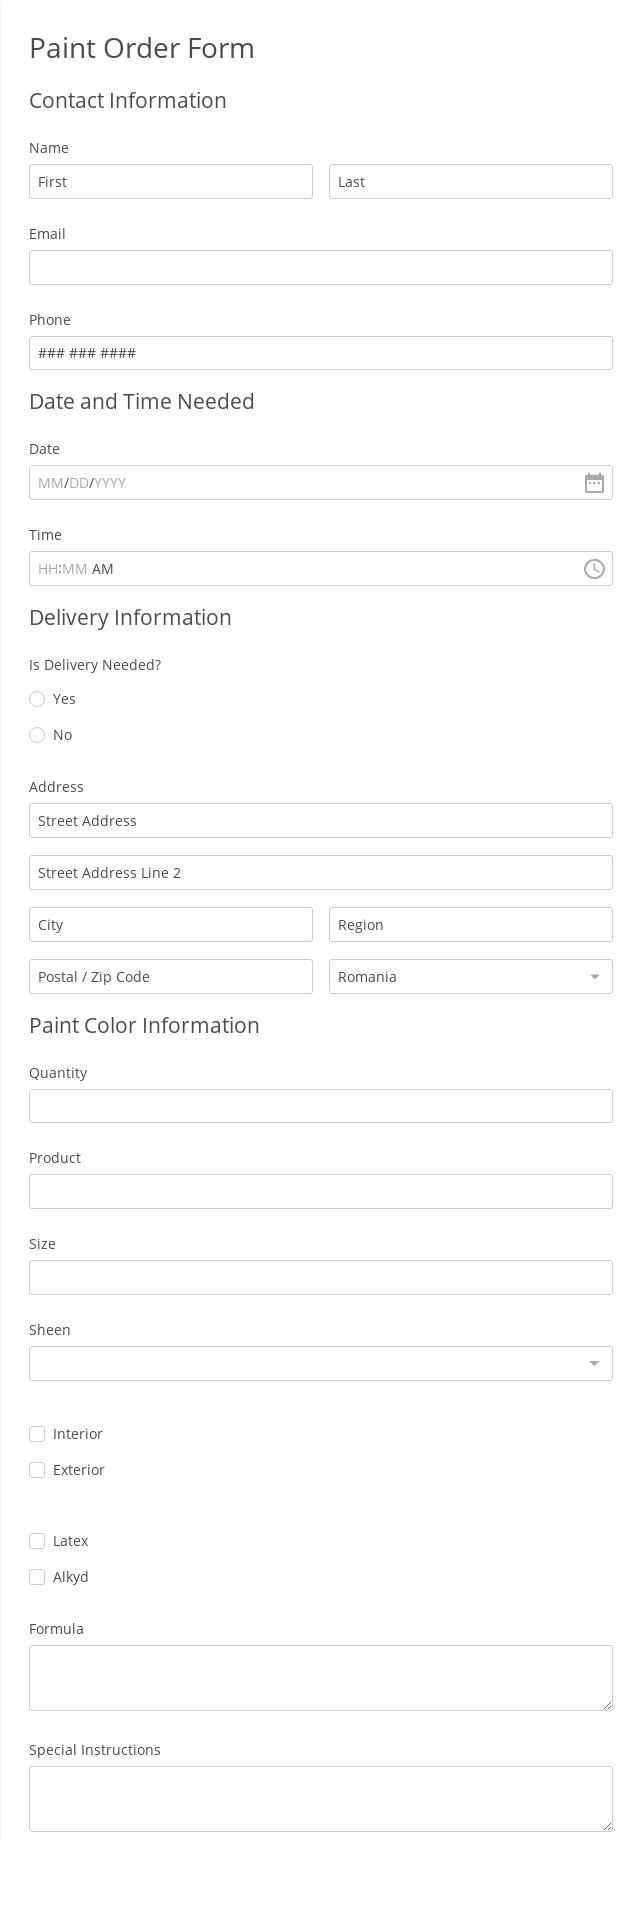 Paint Order Form